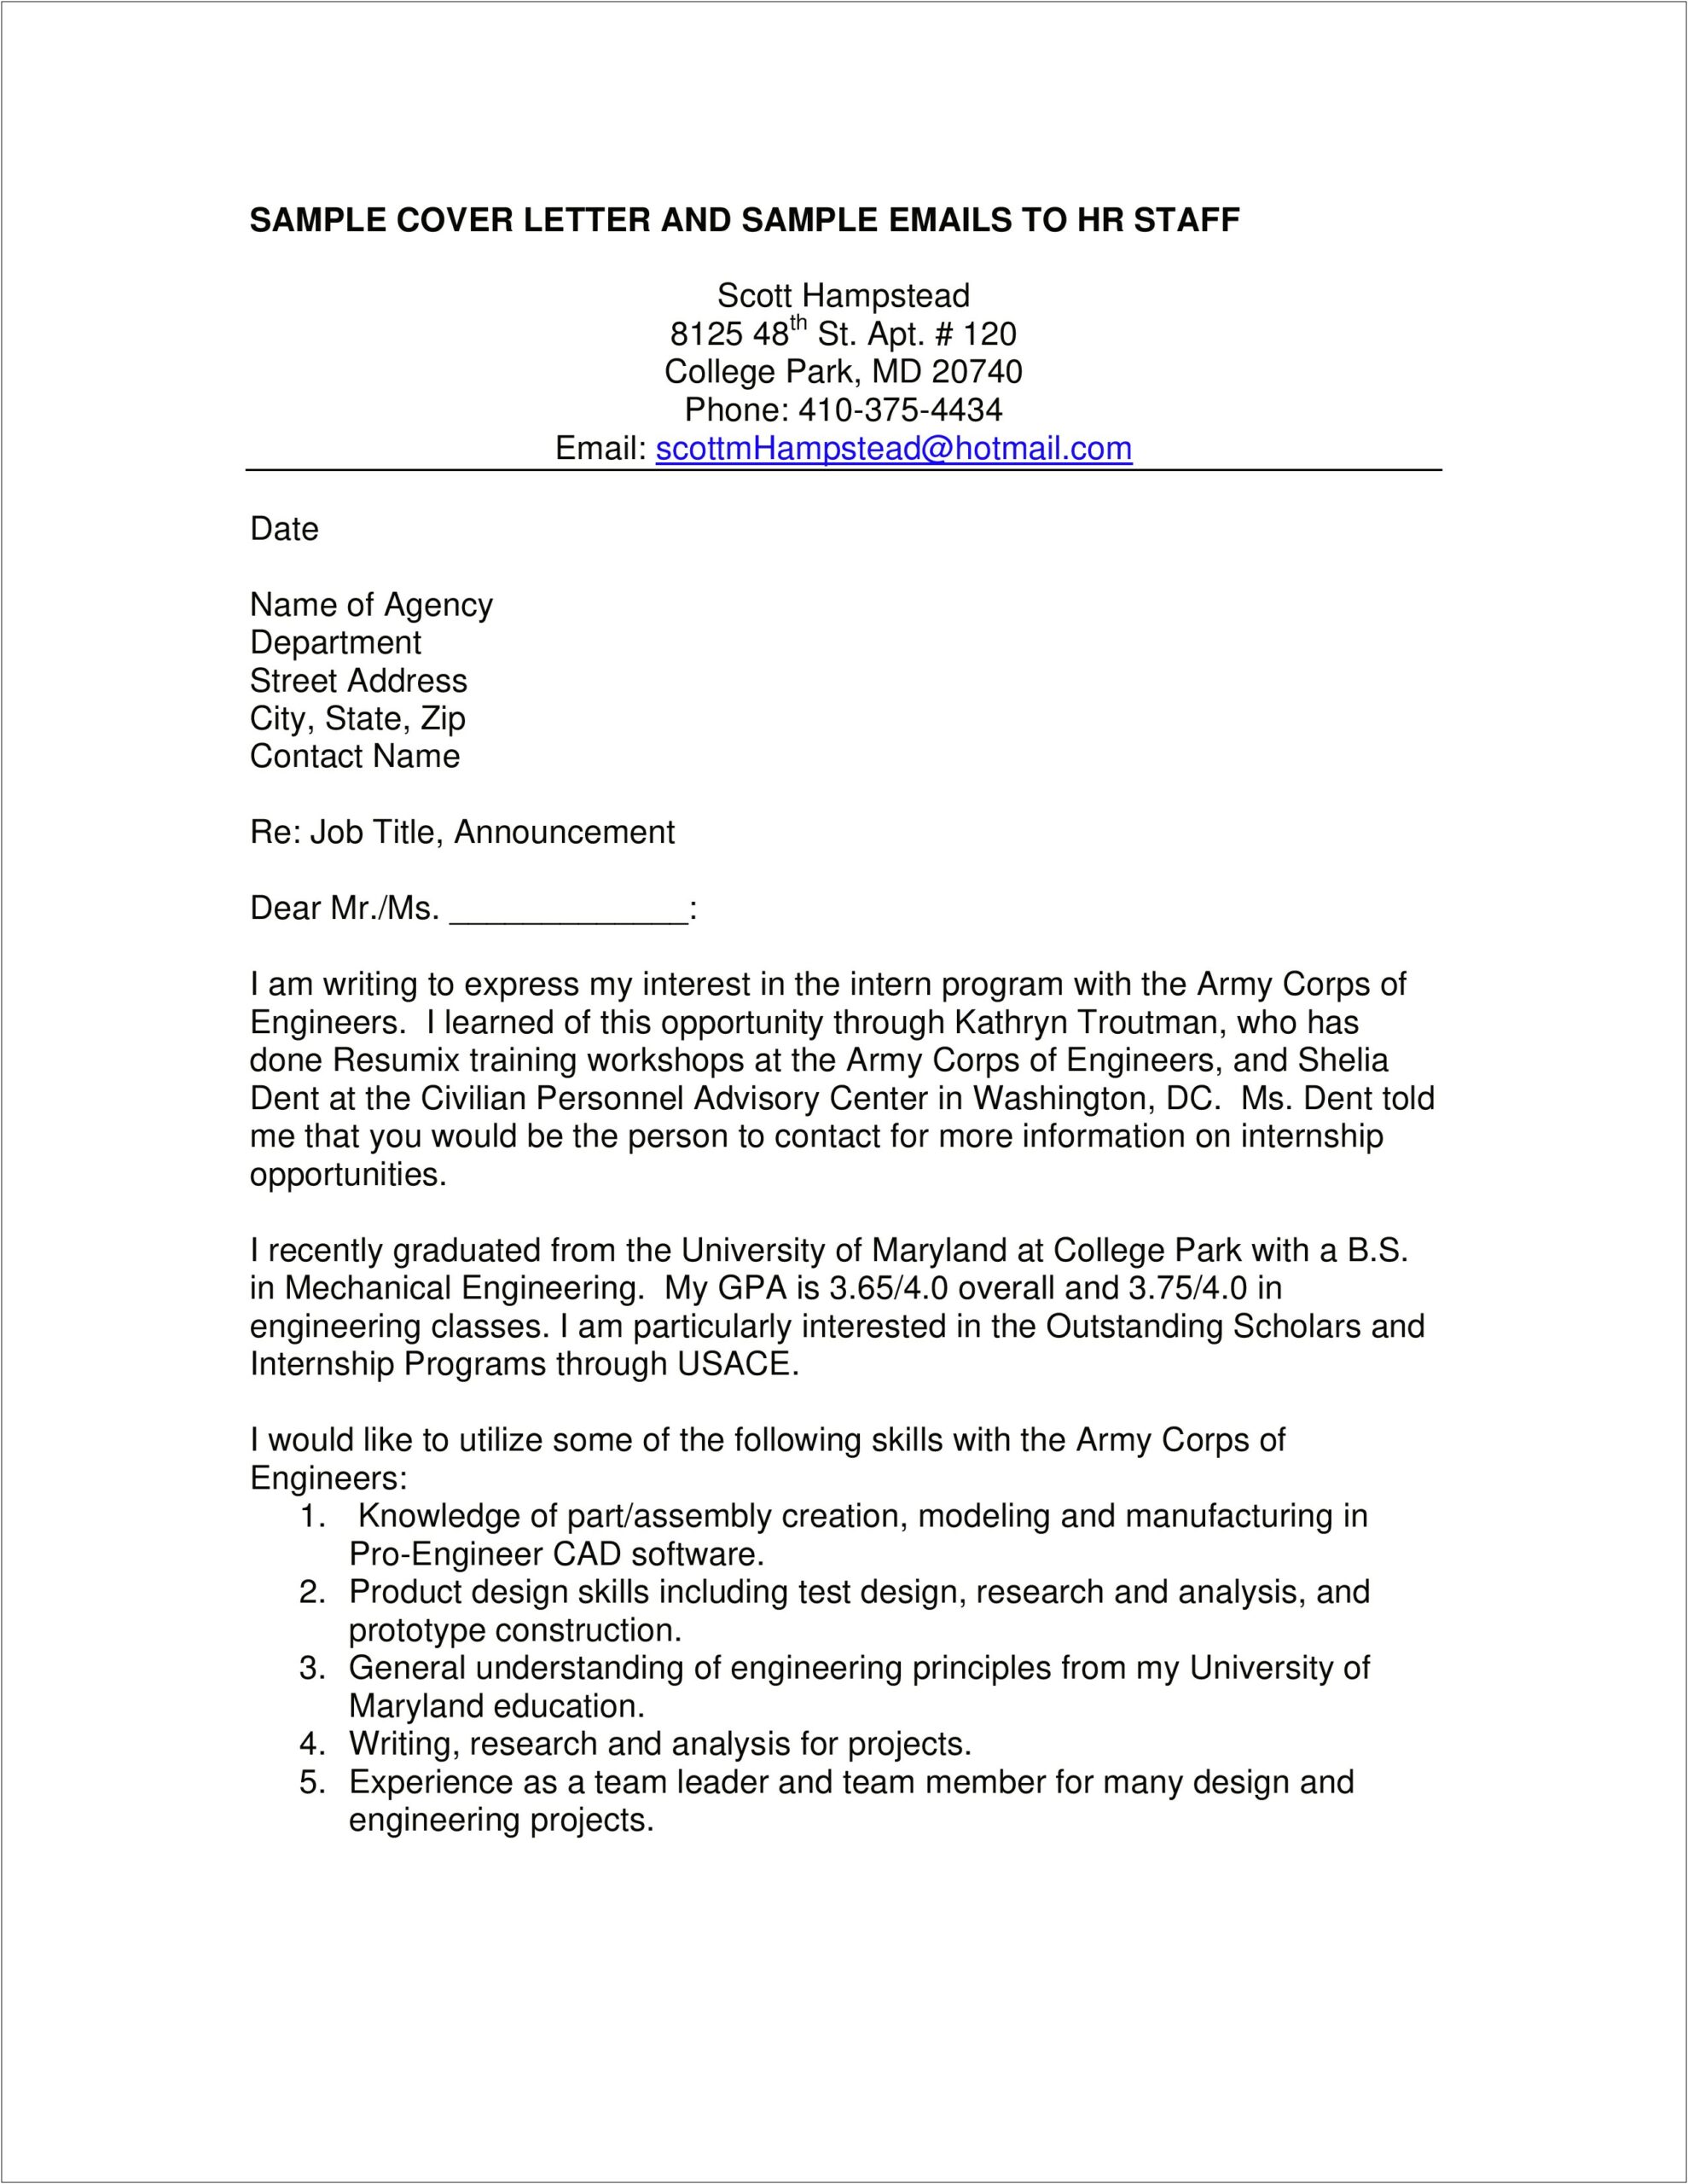 Arizona State Jobs Website Resume Cover Letter